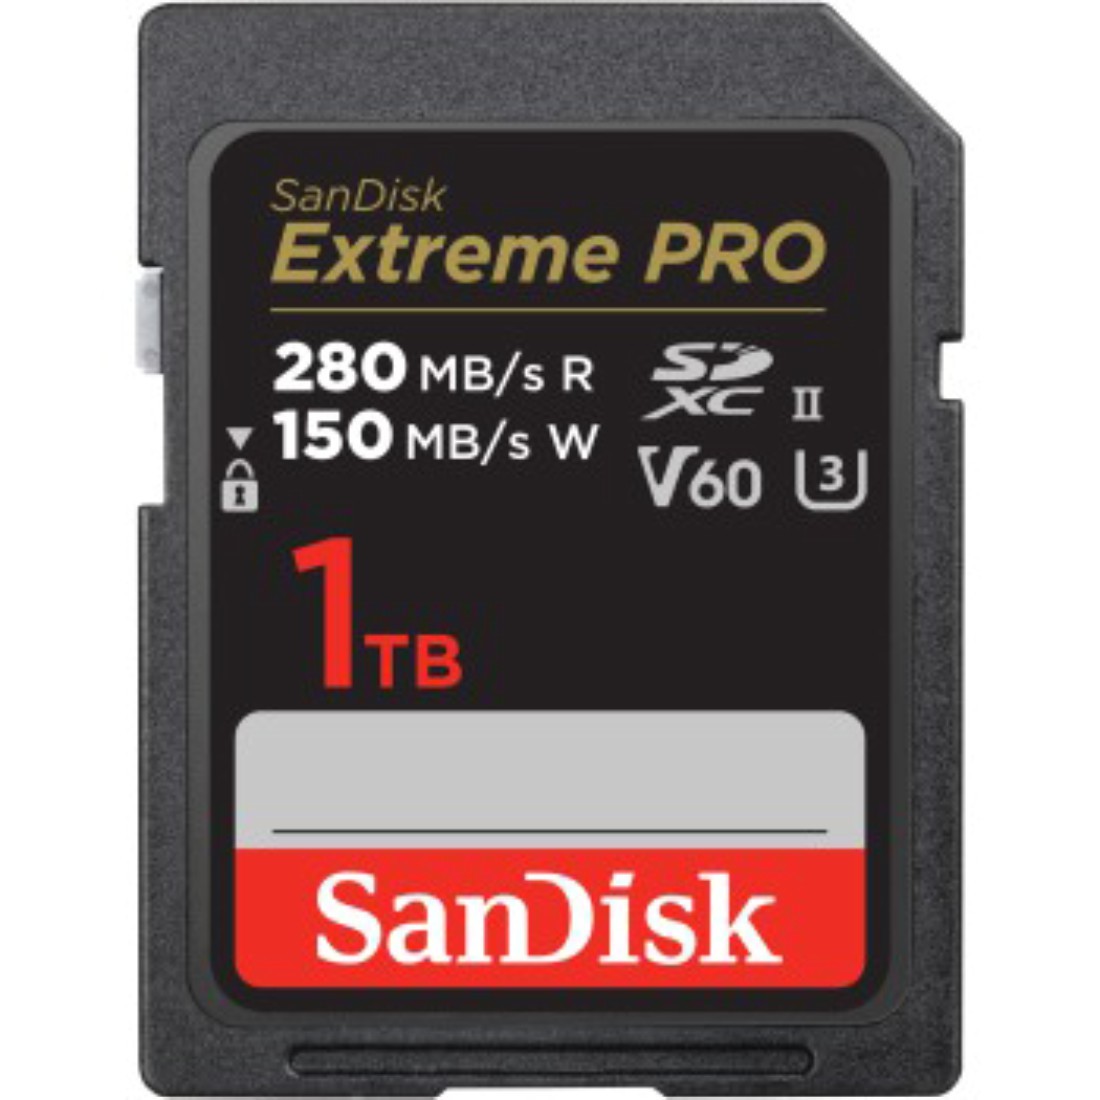 SanDisk Extreme Pro 1TB V60 Uhs-ii Sd, 280/150MB/s,V60,C10,UHS-II /SanDisk